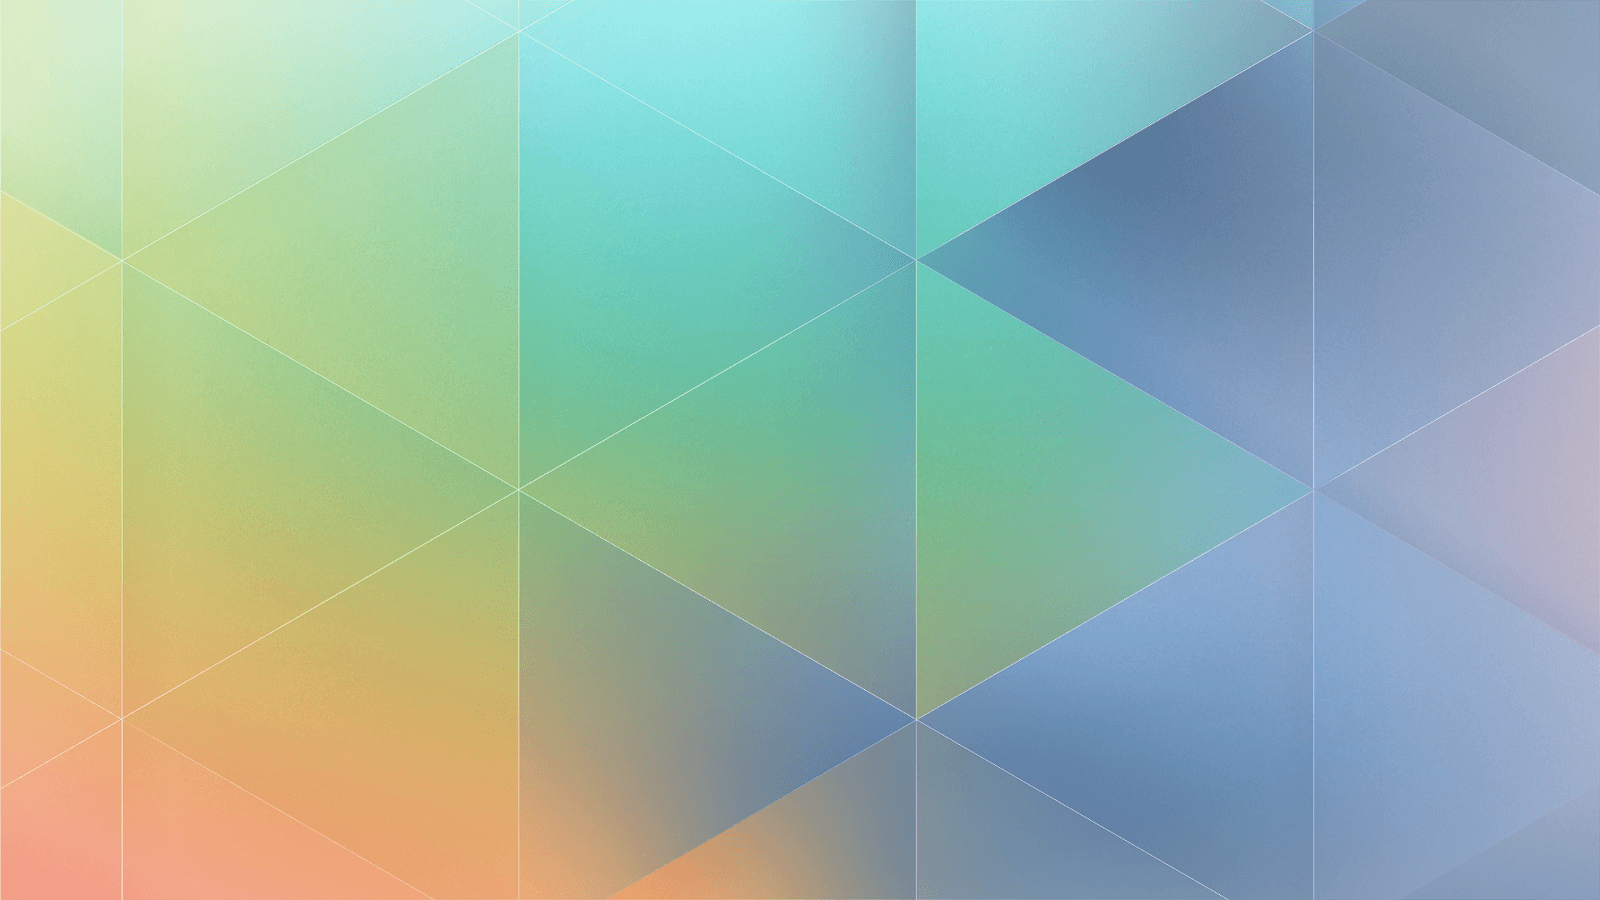 KDE Wallpapers - Wallpaper Cave